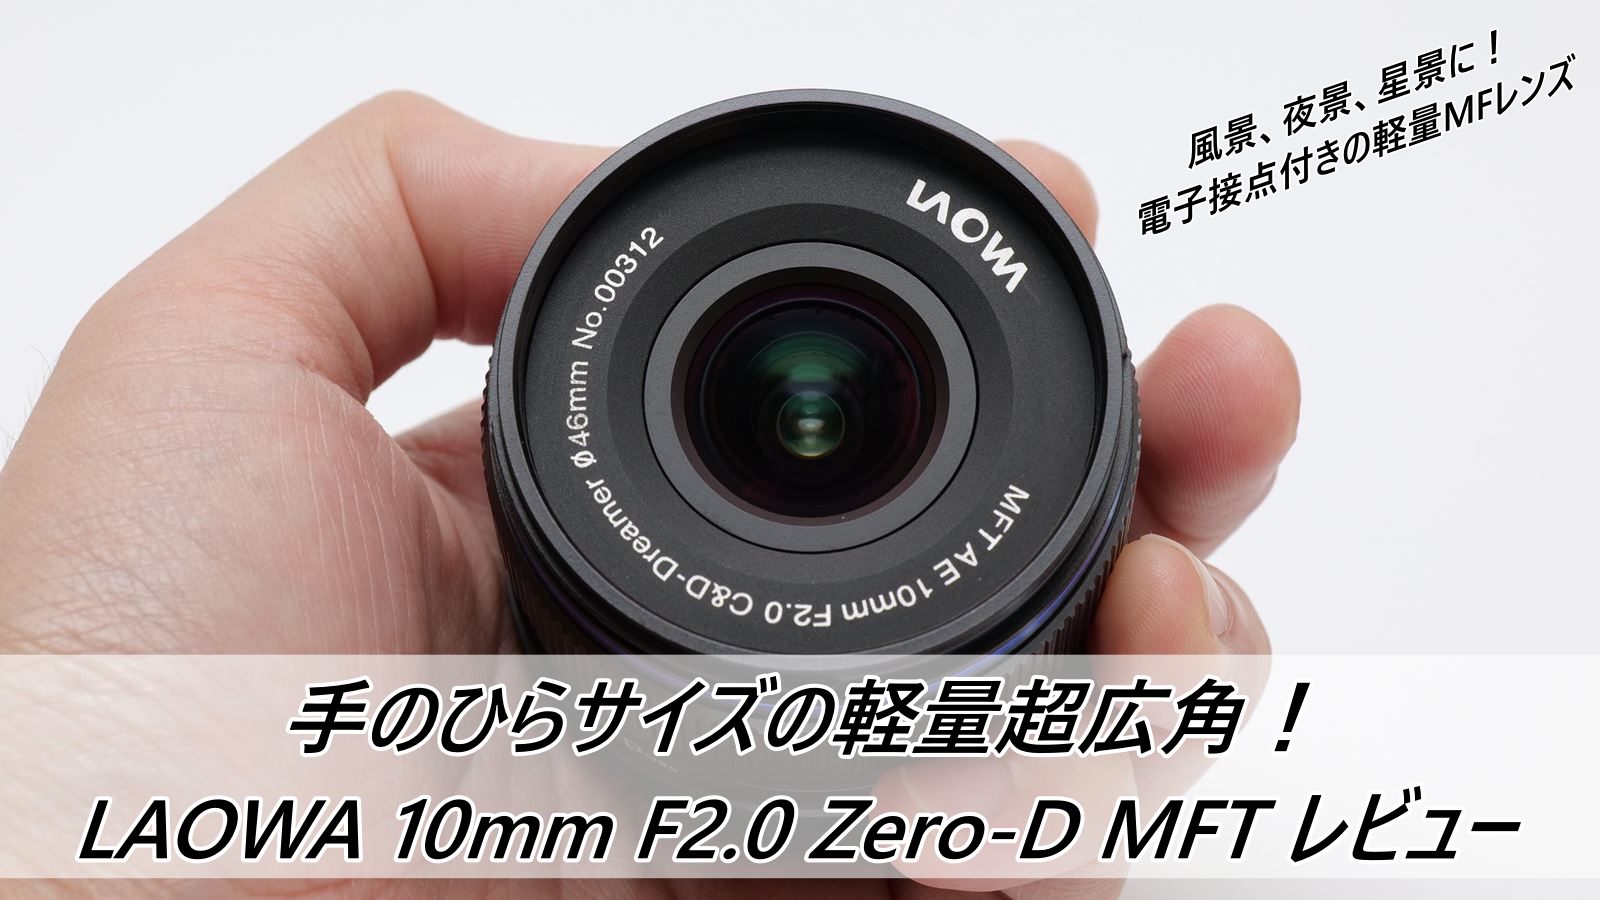 LAOWA 10mm F2.0 Zero-D MFT レビュー 星も風景も楽しいMF超広角レンズ ...